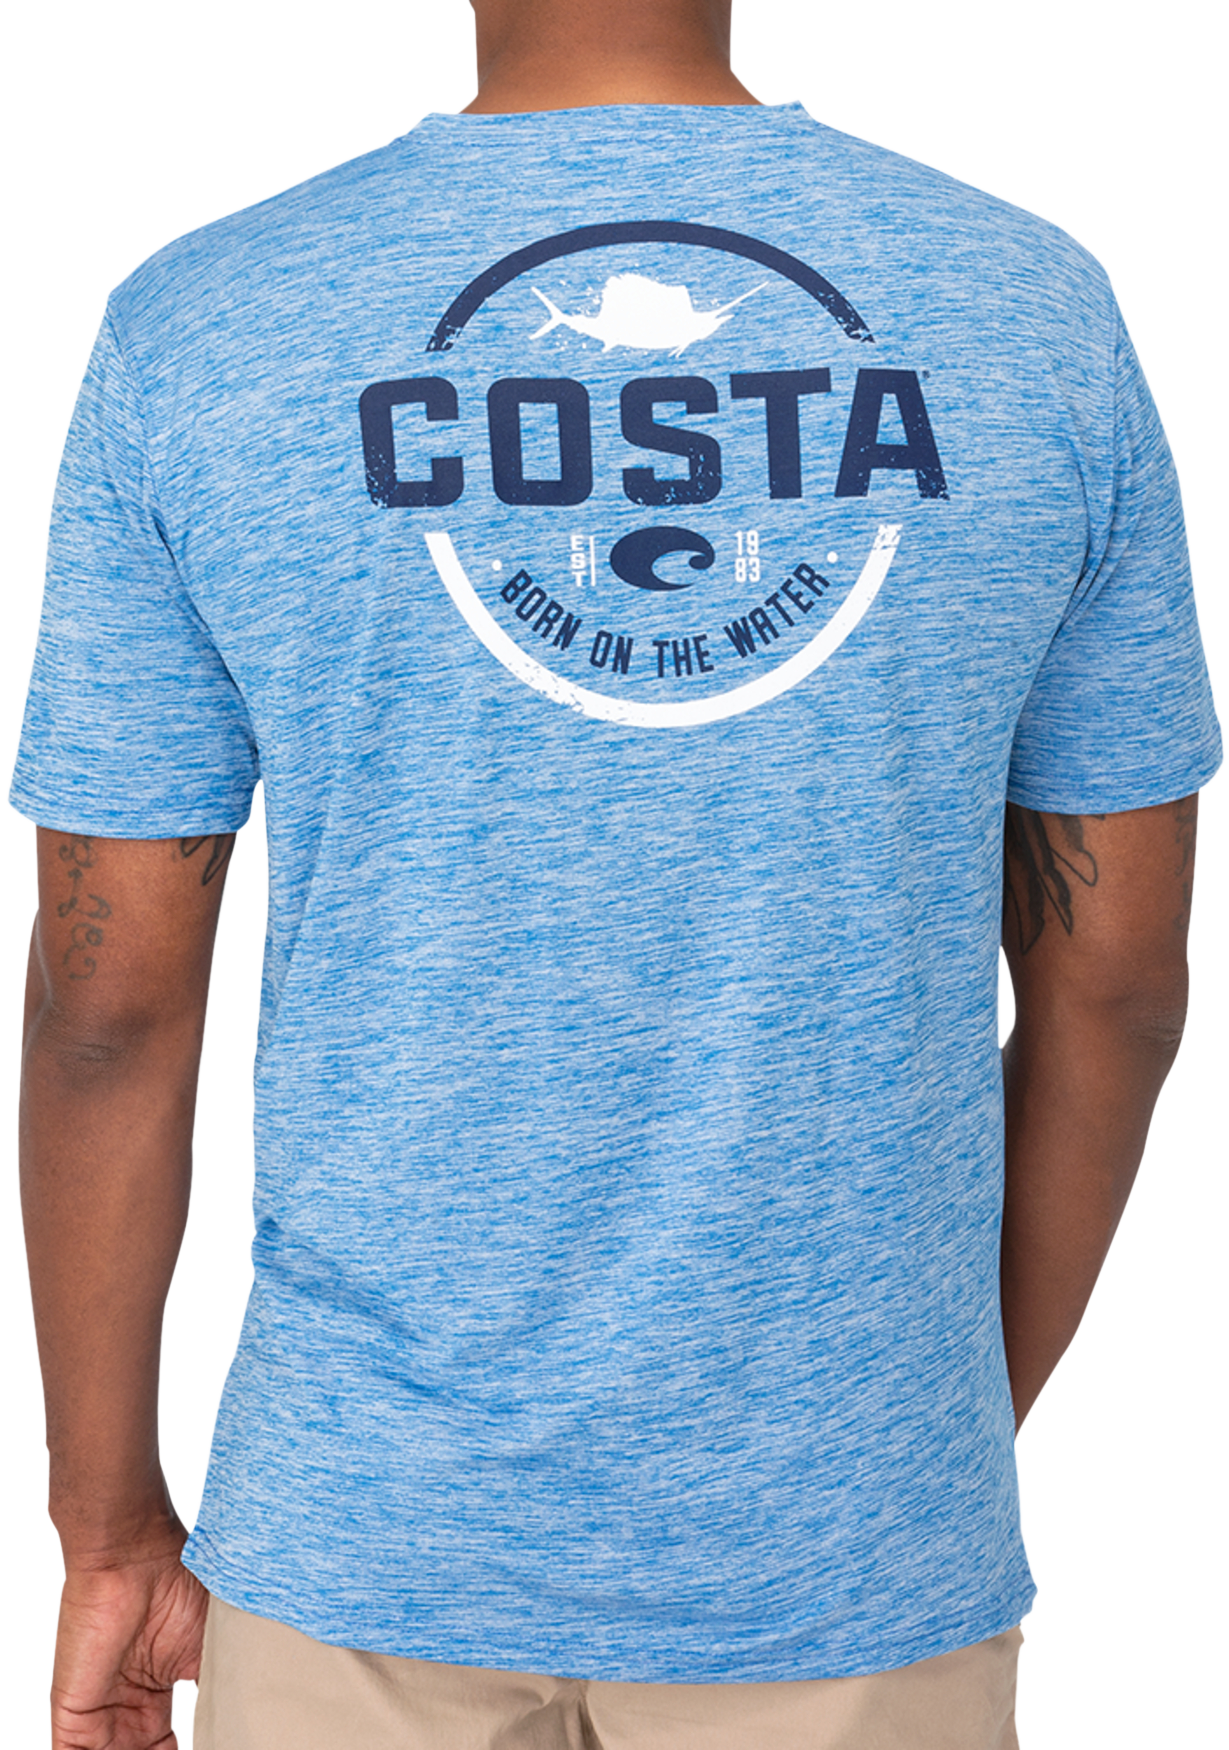 Costa Tech Insignia Sailfish Tee - Short Sleeve - Royal Blue